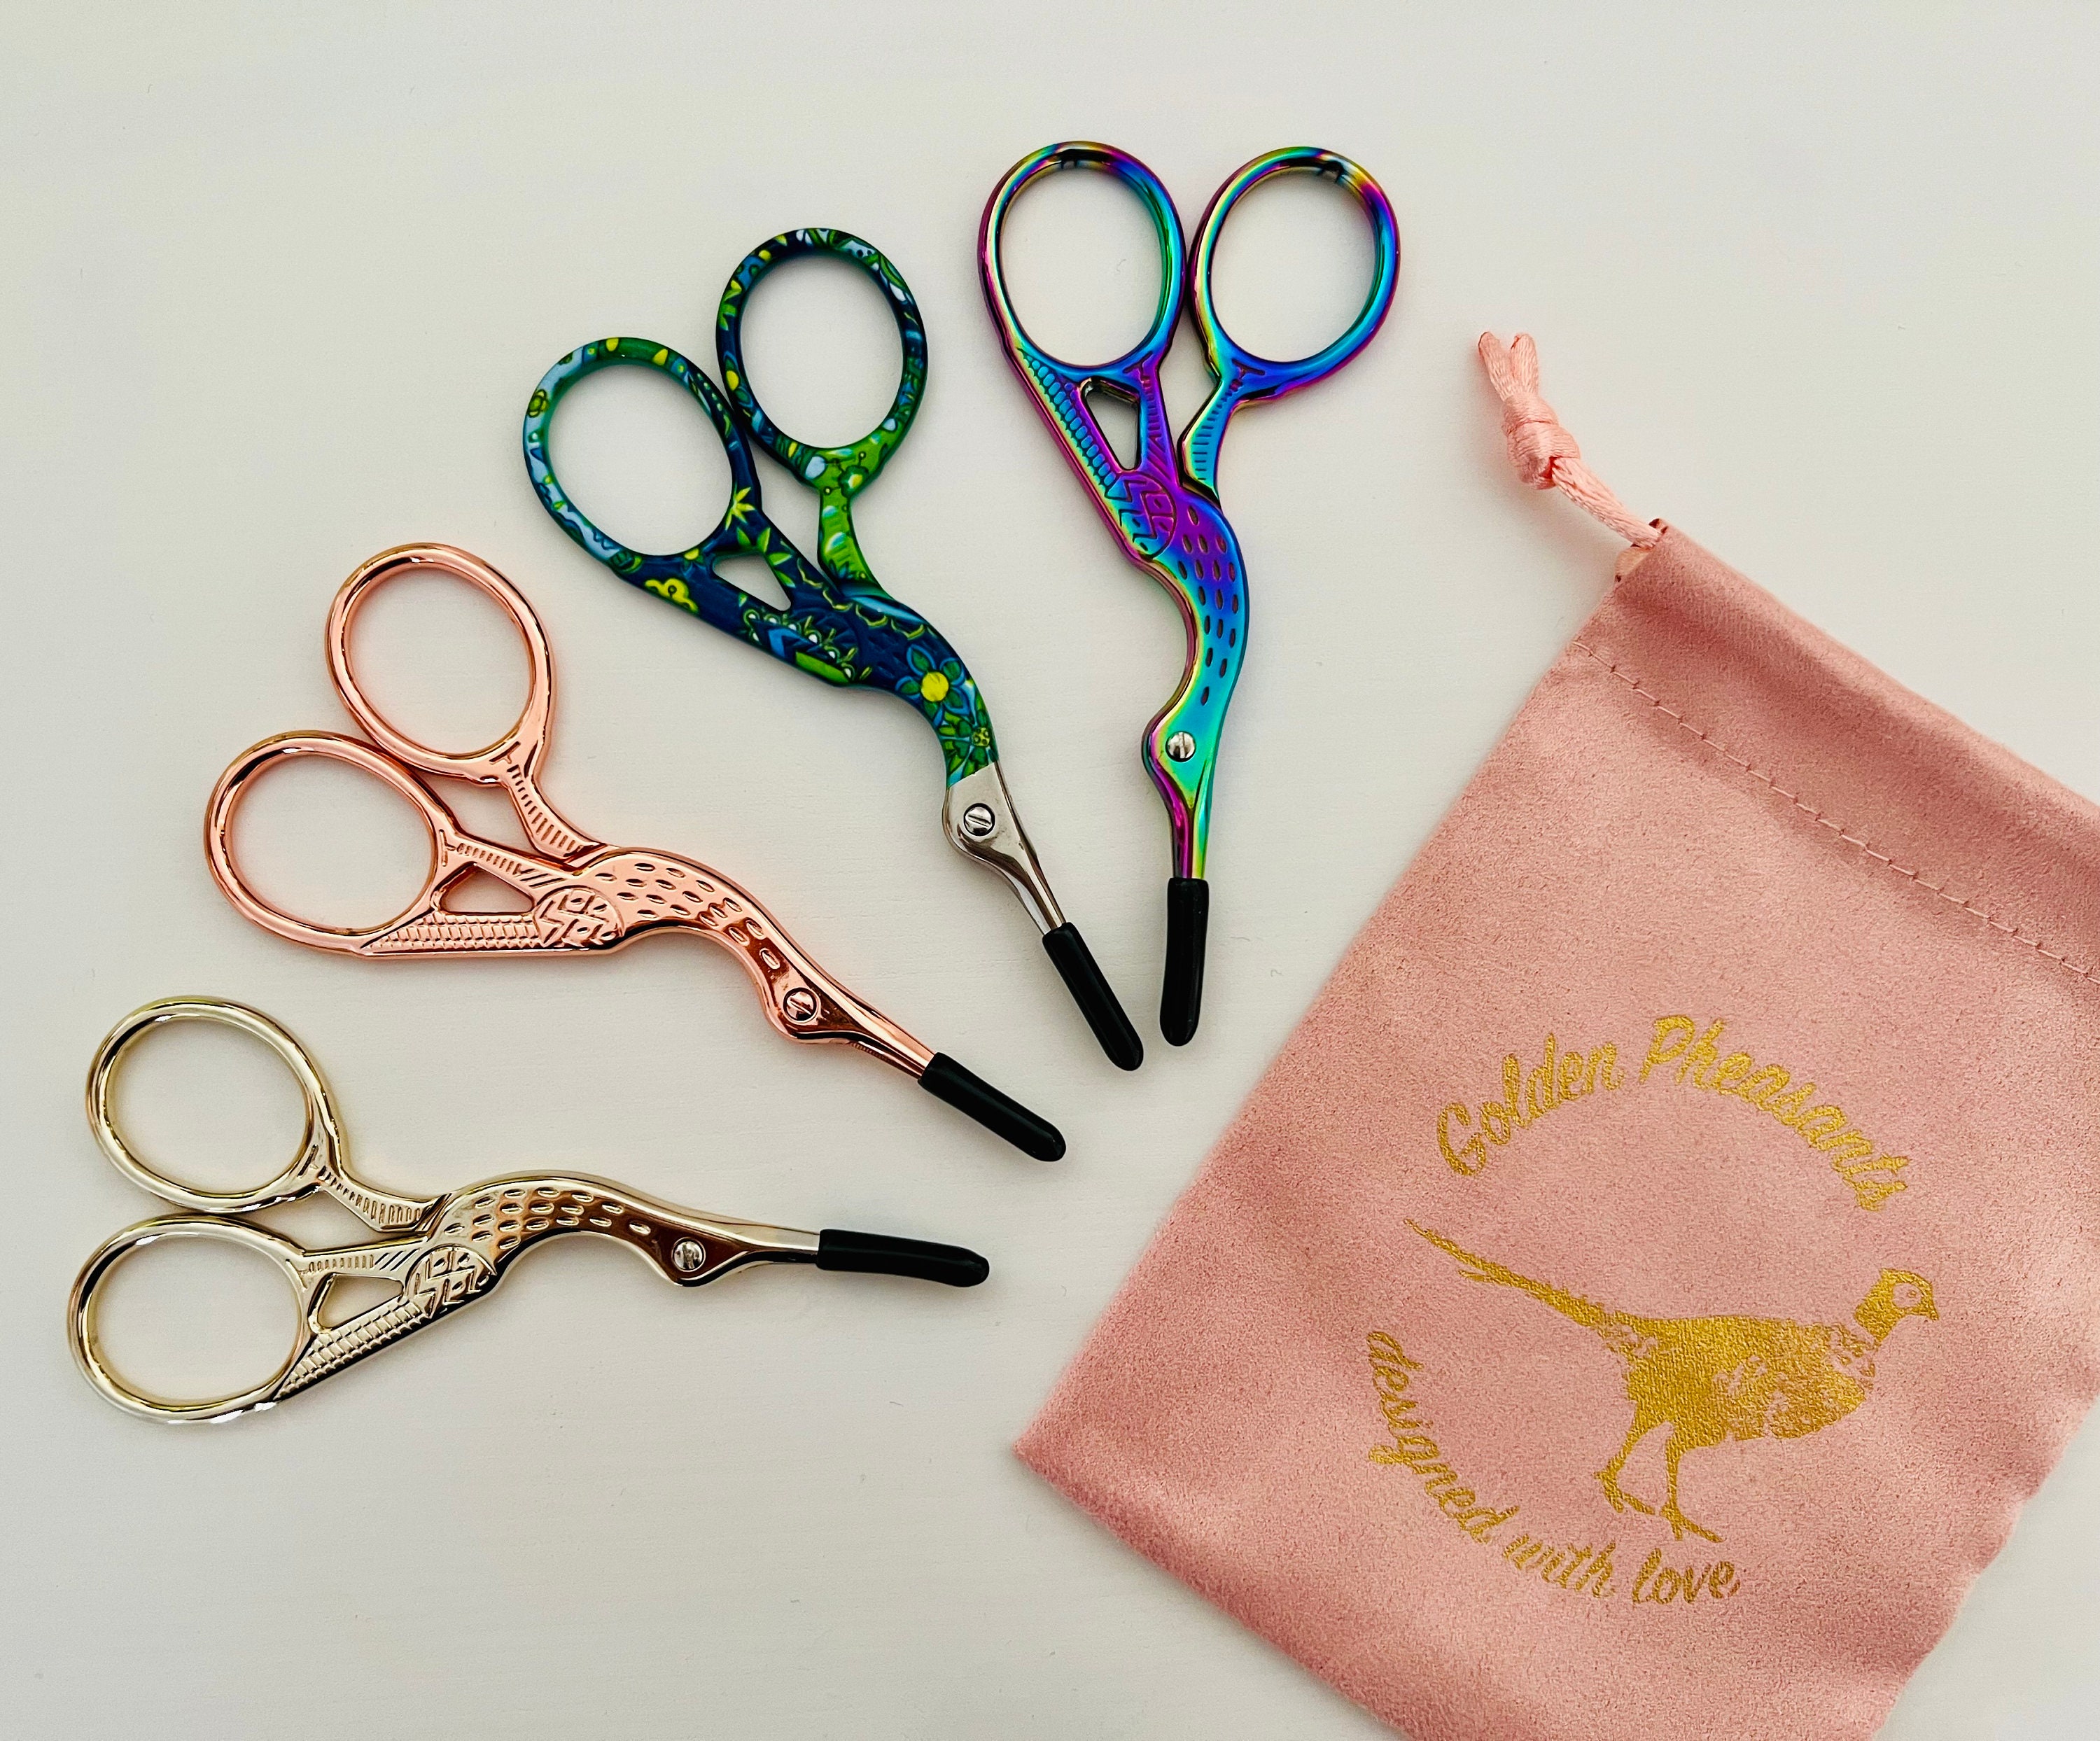 Silver Stork Embroidery Scissors, Sewing Scissors, Quality Crane